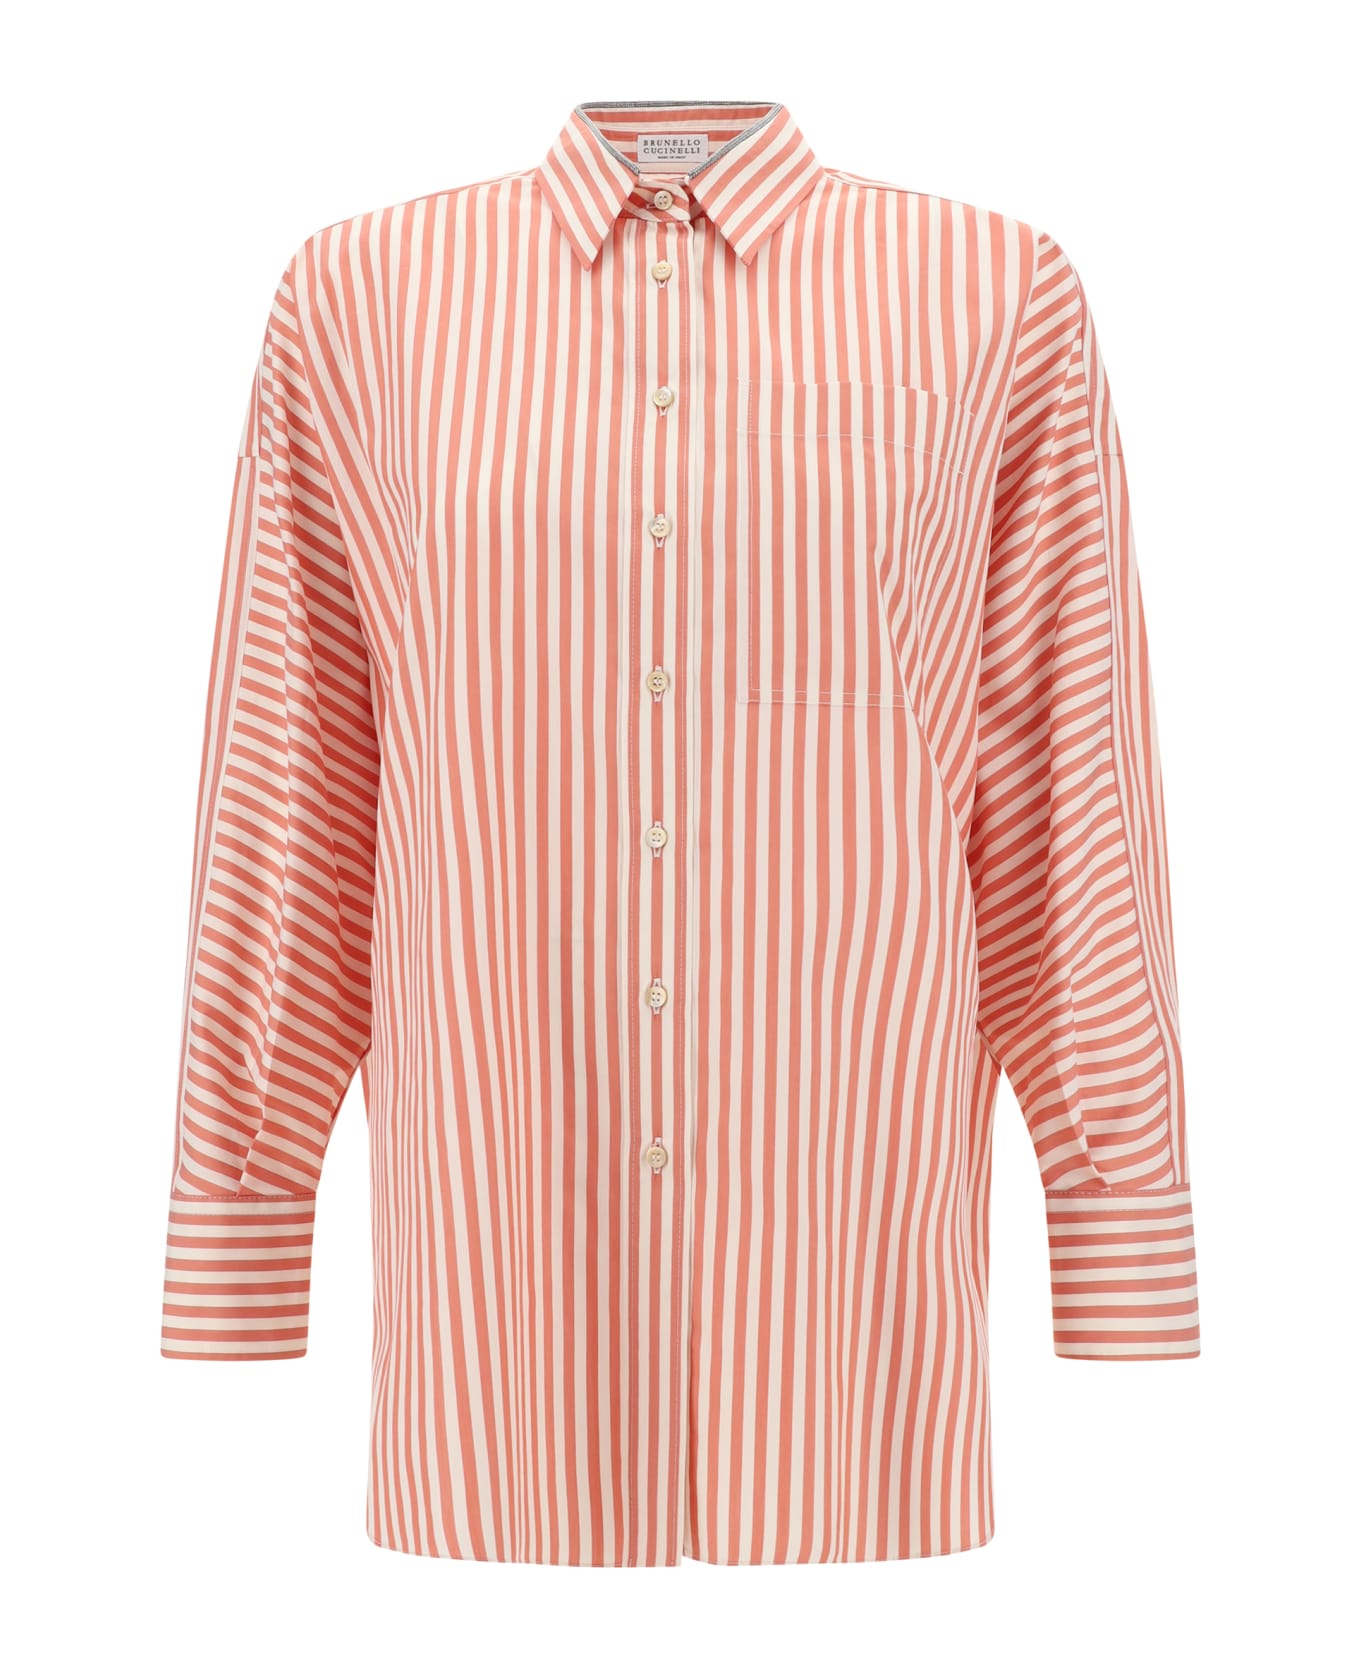 Brunello Cucinelli Shirt - Panama/arancio